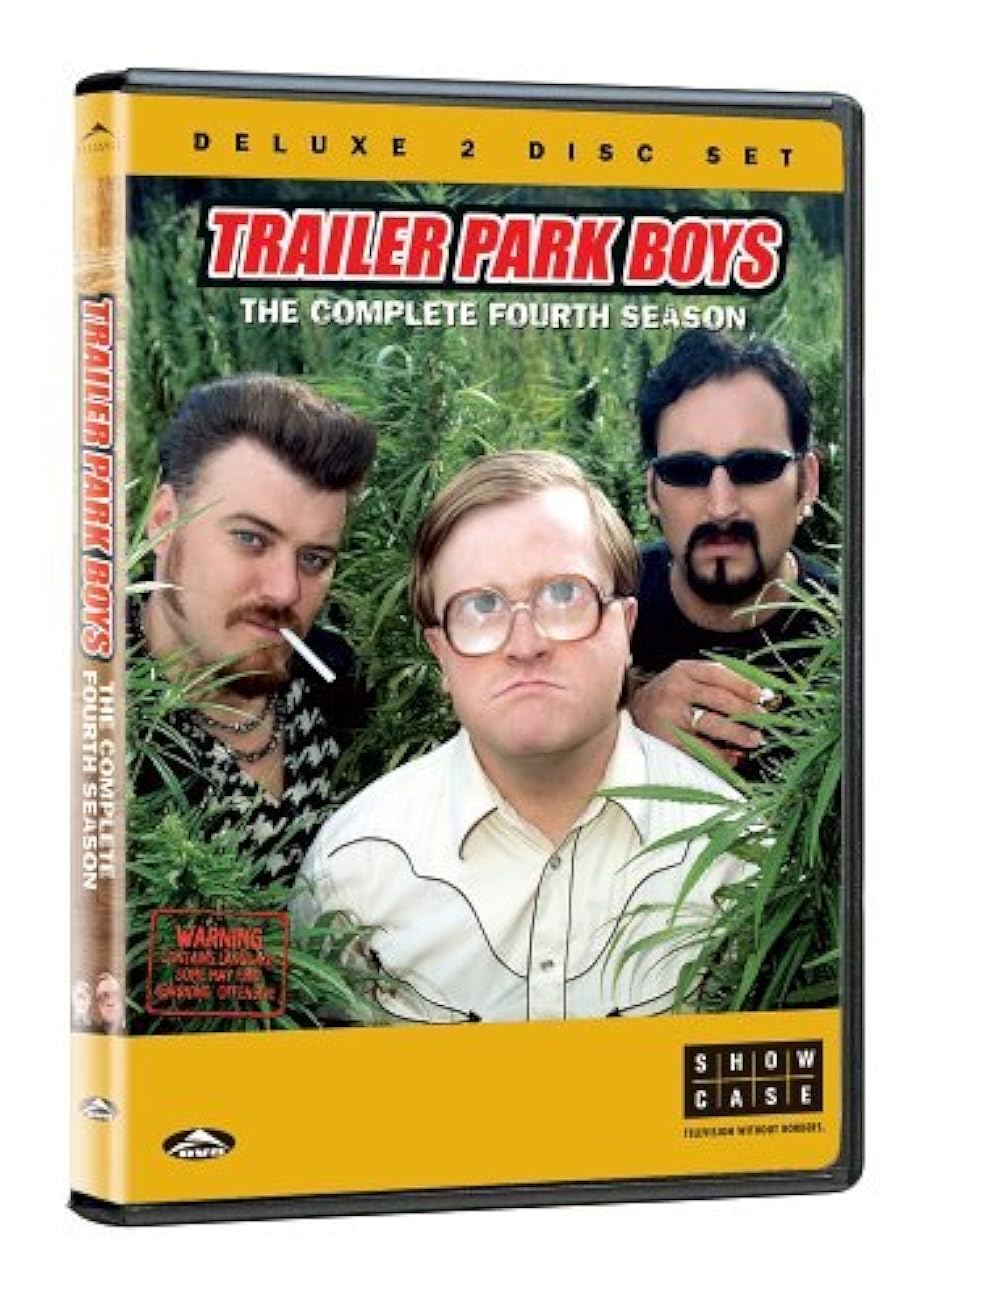 derek woltman recommends watch trailer park boys free pic